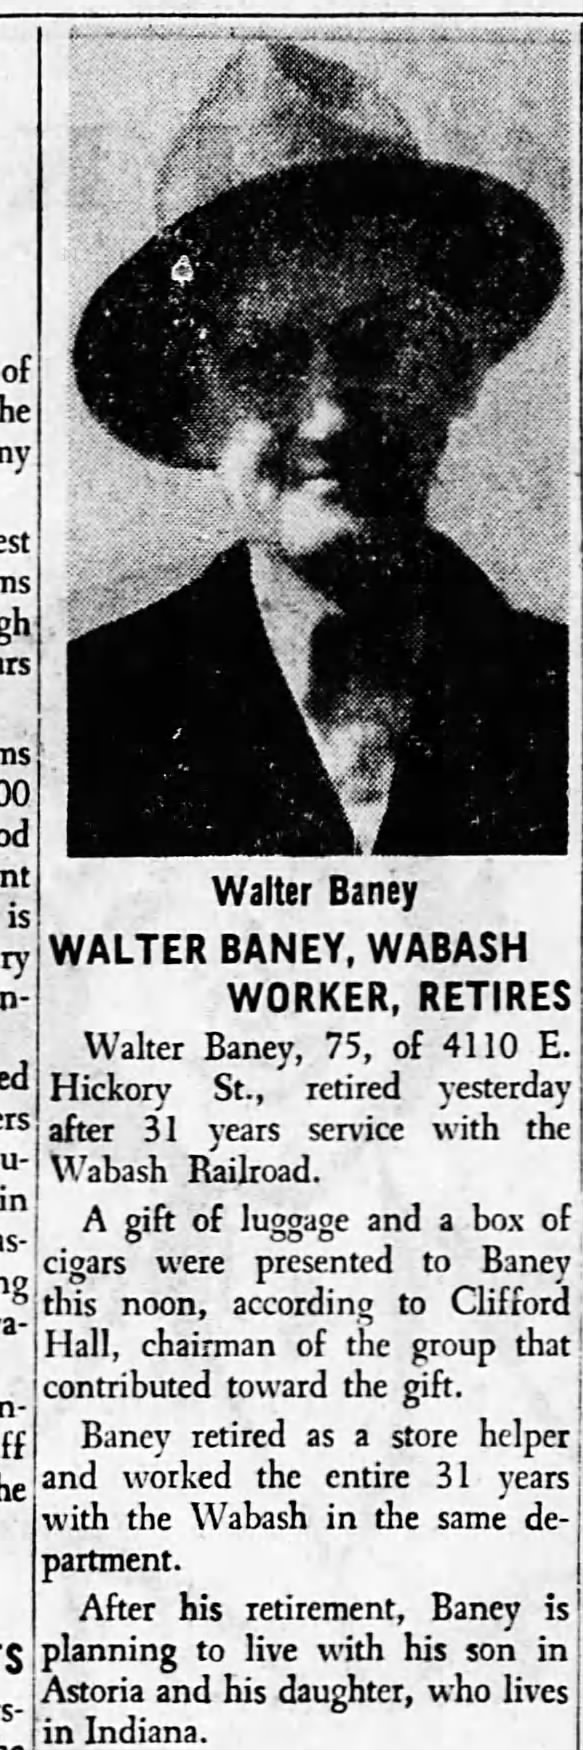 WALTER SCOTT BANEY-RETIREMENT-1955-WORKED FOR WABASH